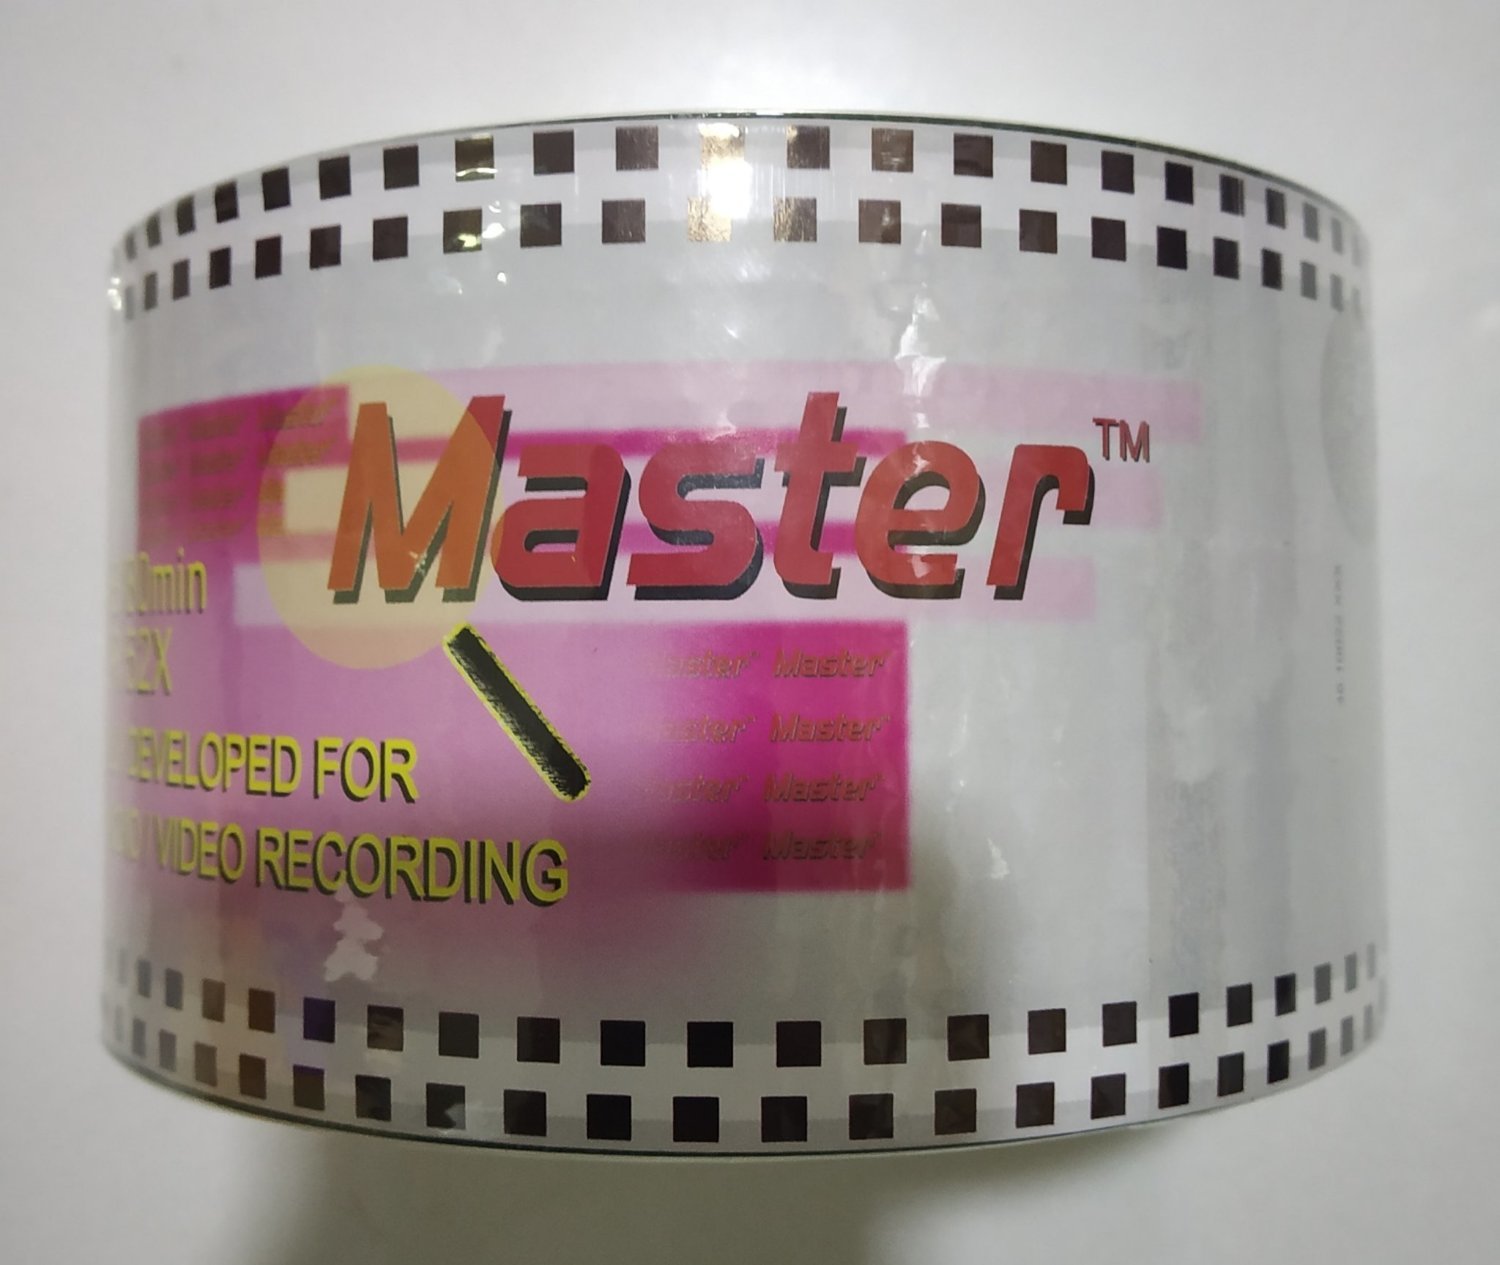 Master 700mb/80min 52x CD-R, Pack of 50 CDs